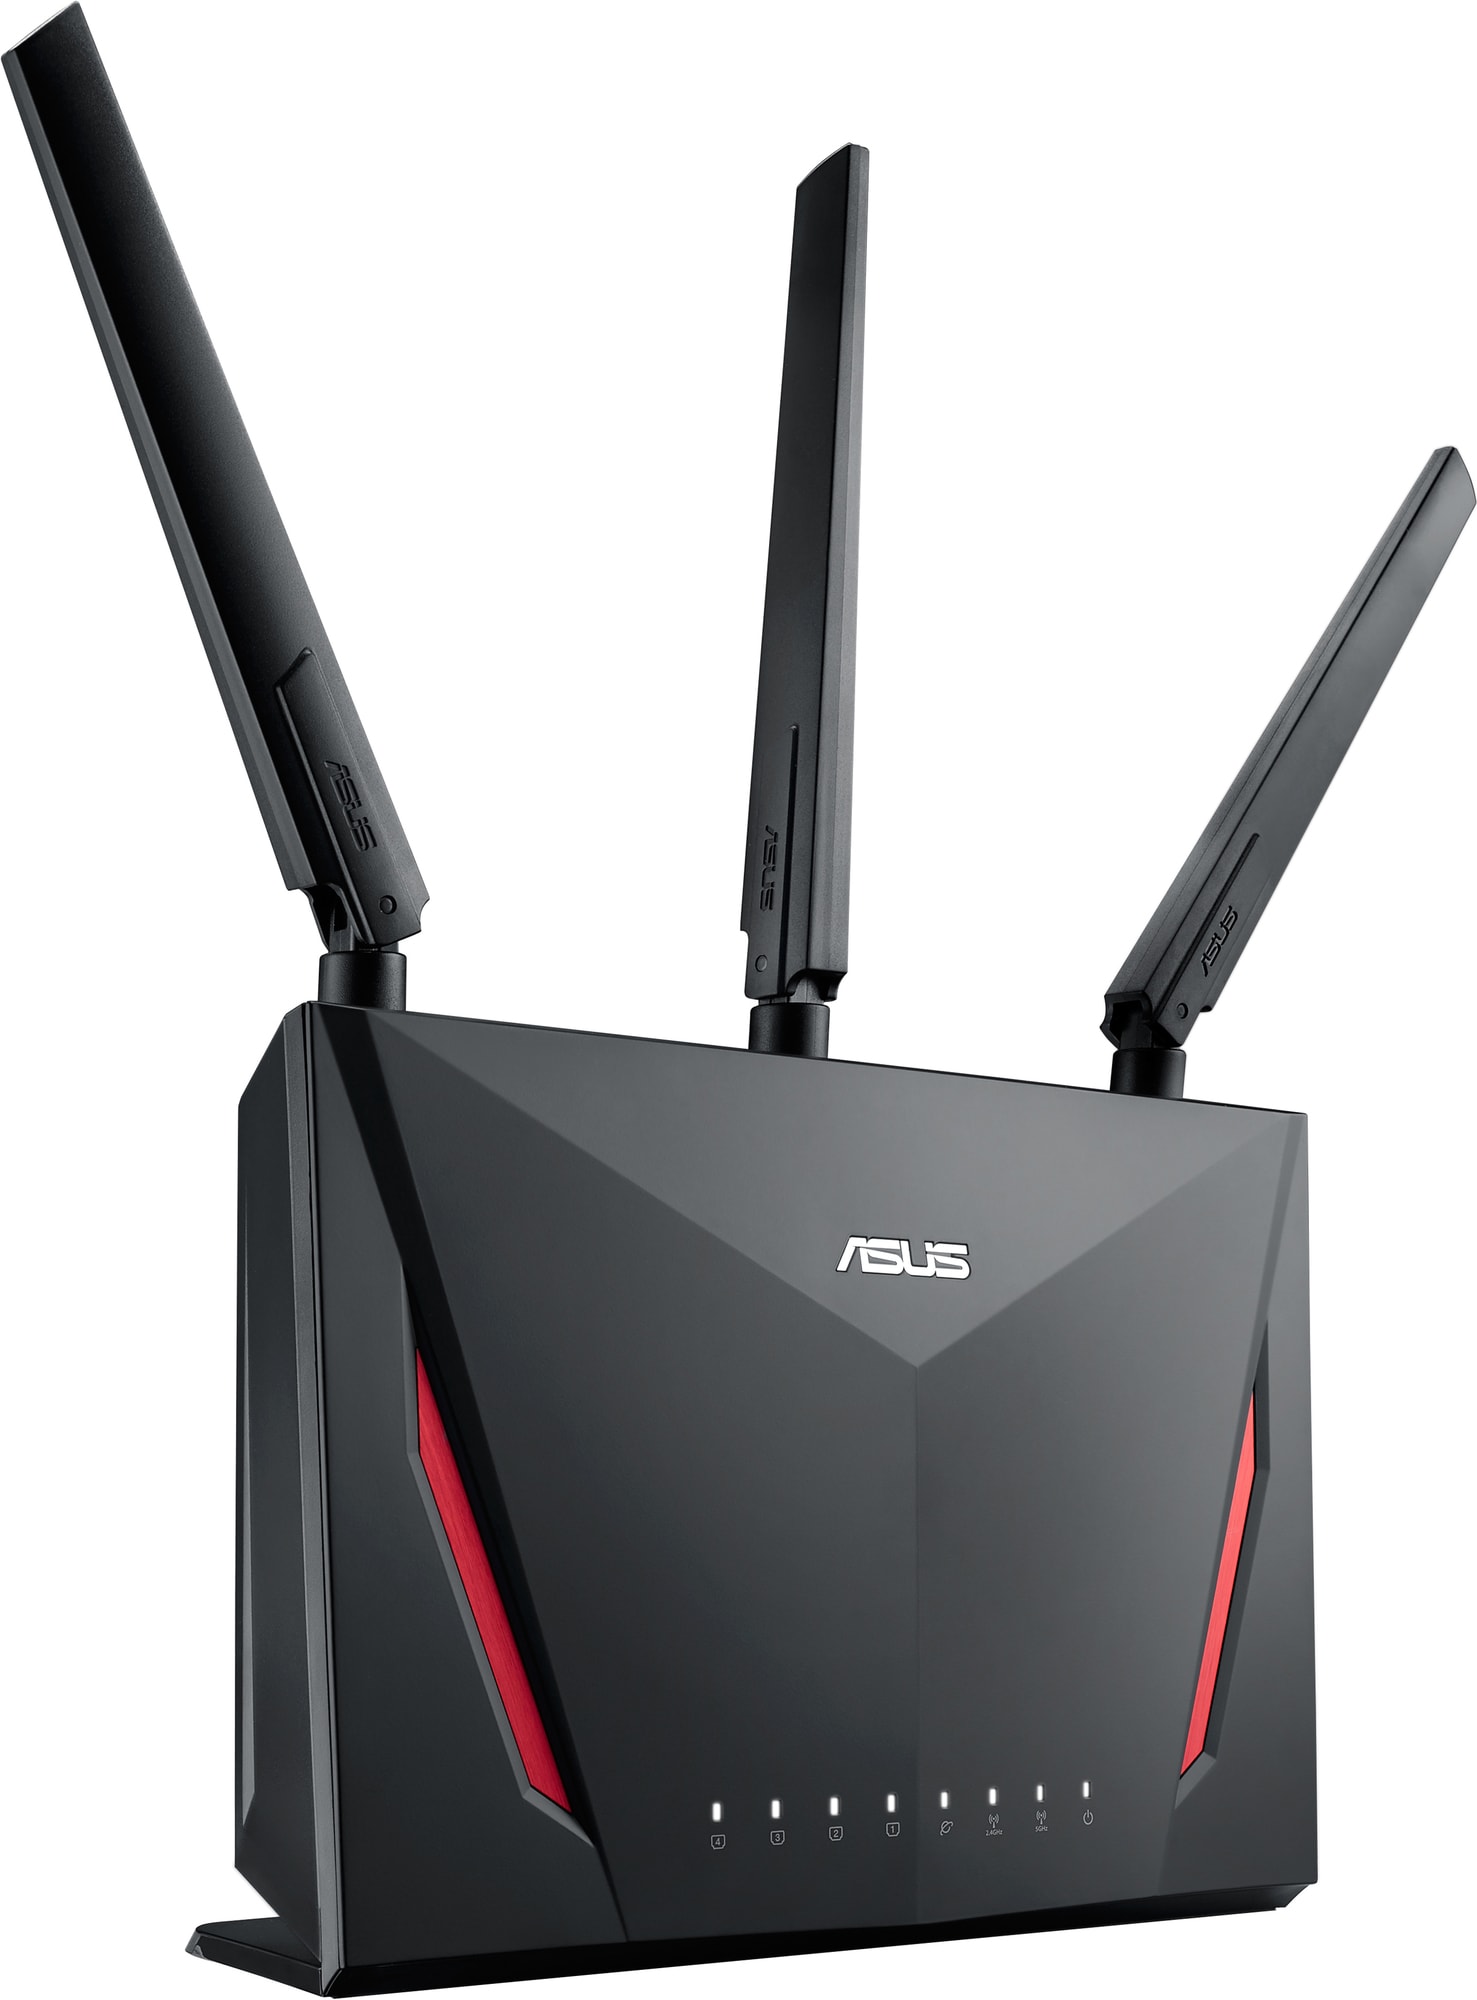 Asus RT-AC86U trådløs router. - Elkjøp